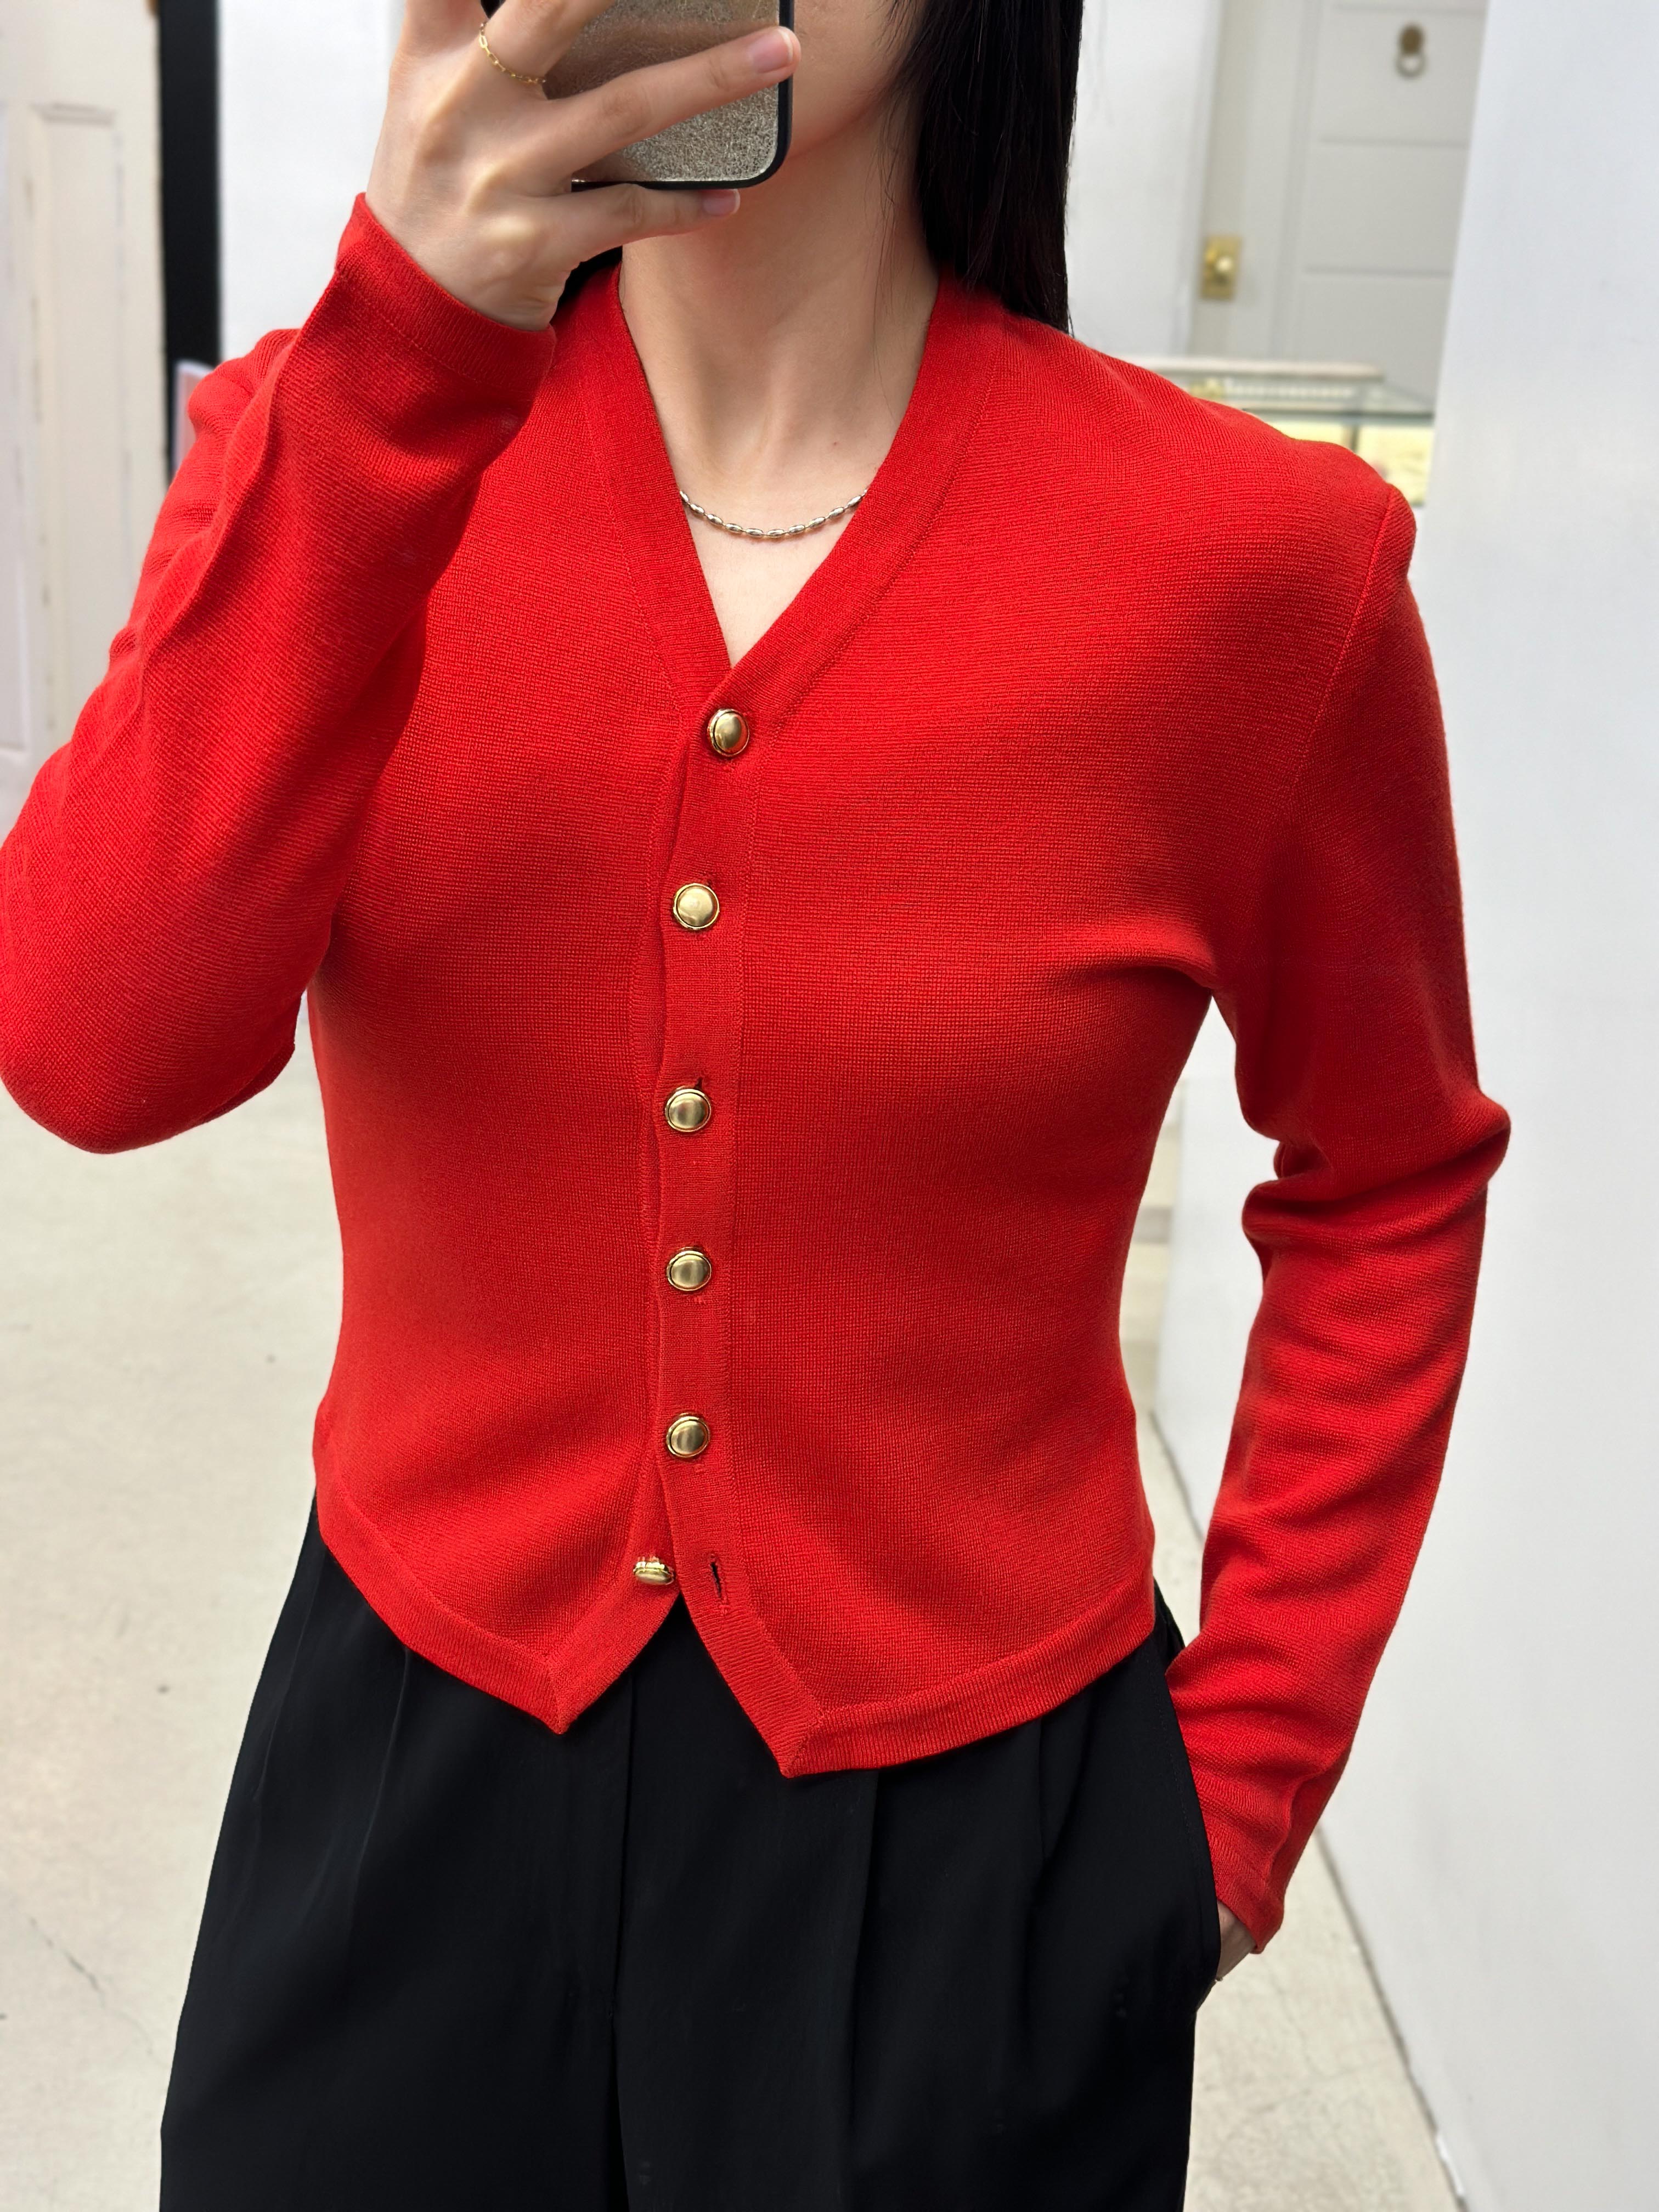 Dior red cardigan